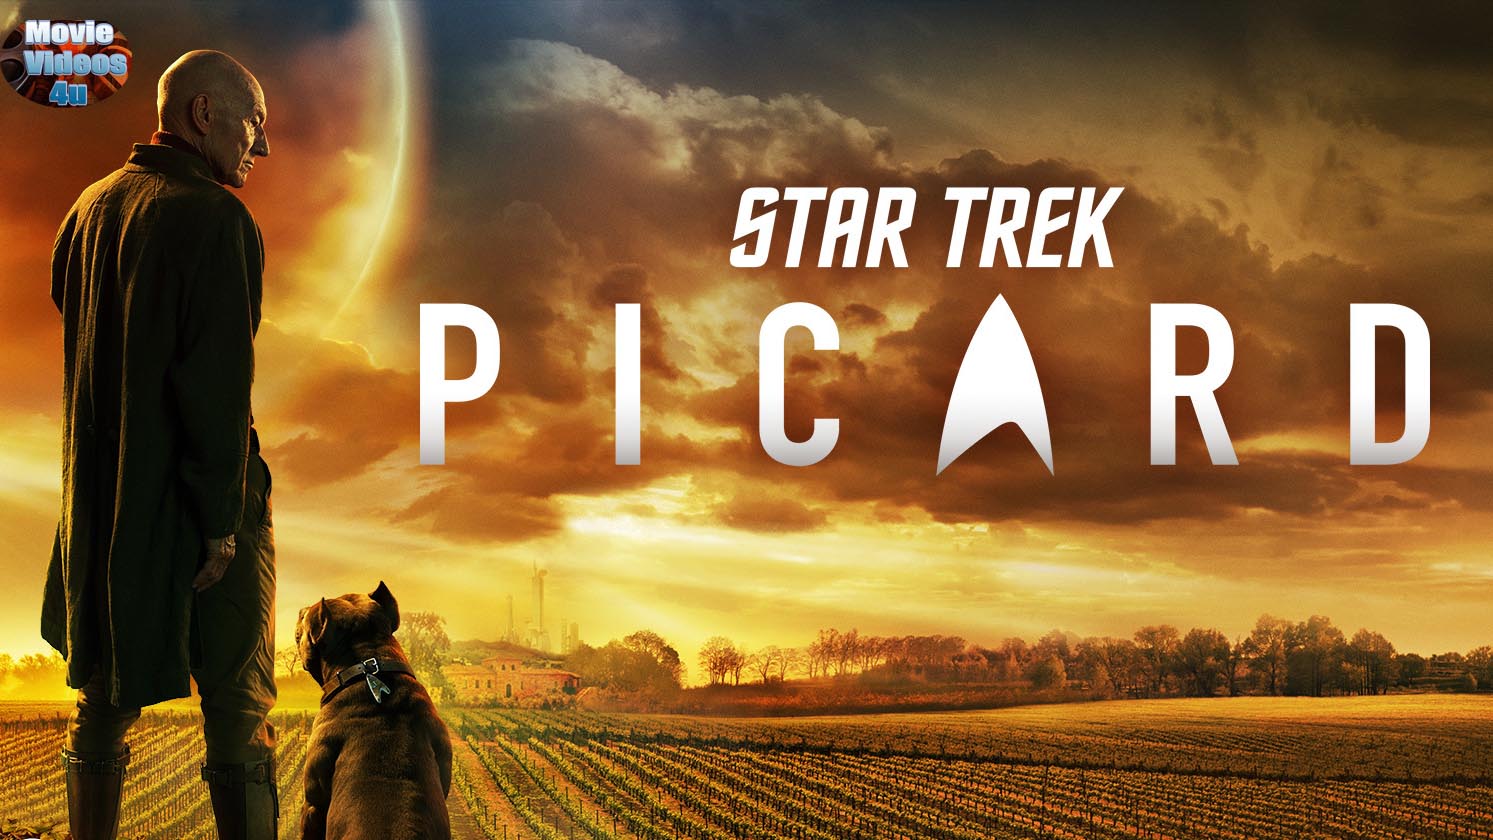 STAR TREK: PICARD 2019 Full series video trailer Free Online